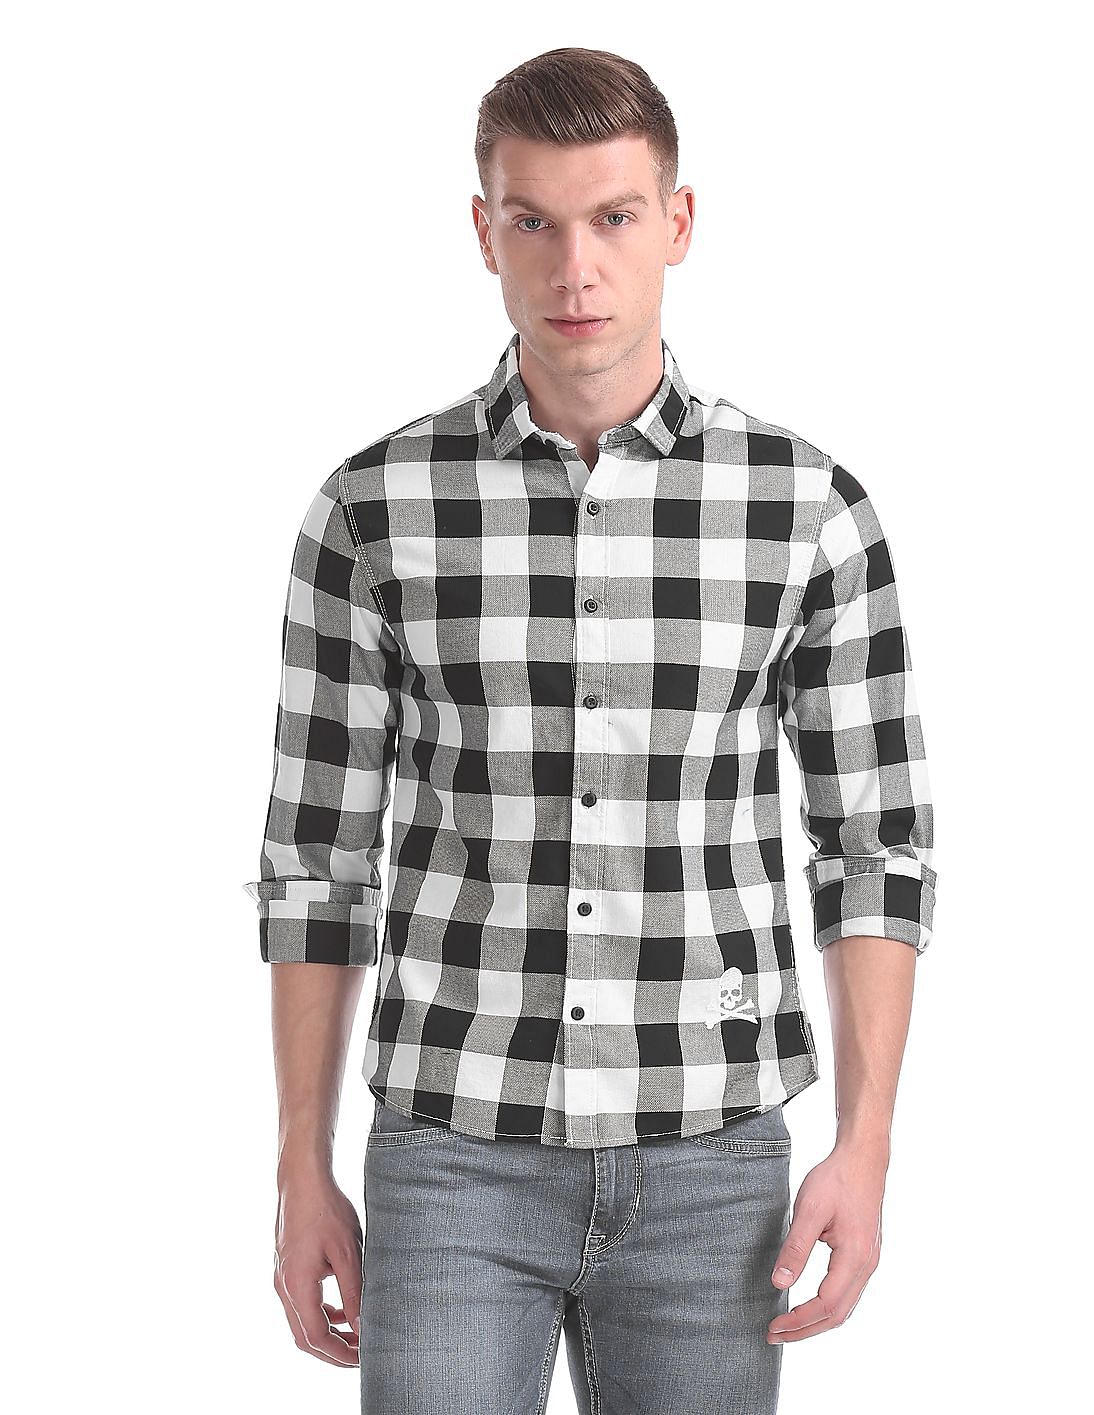 Buy Colt Long Sleeve Check Shirt - NNNOW.com